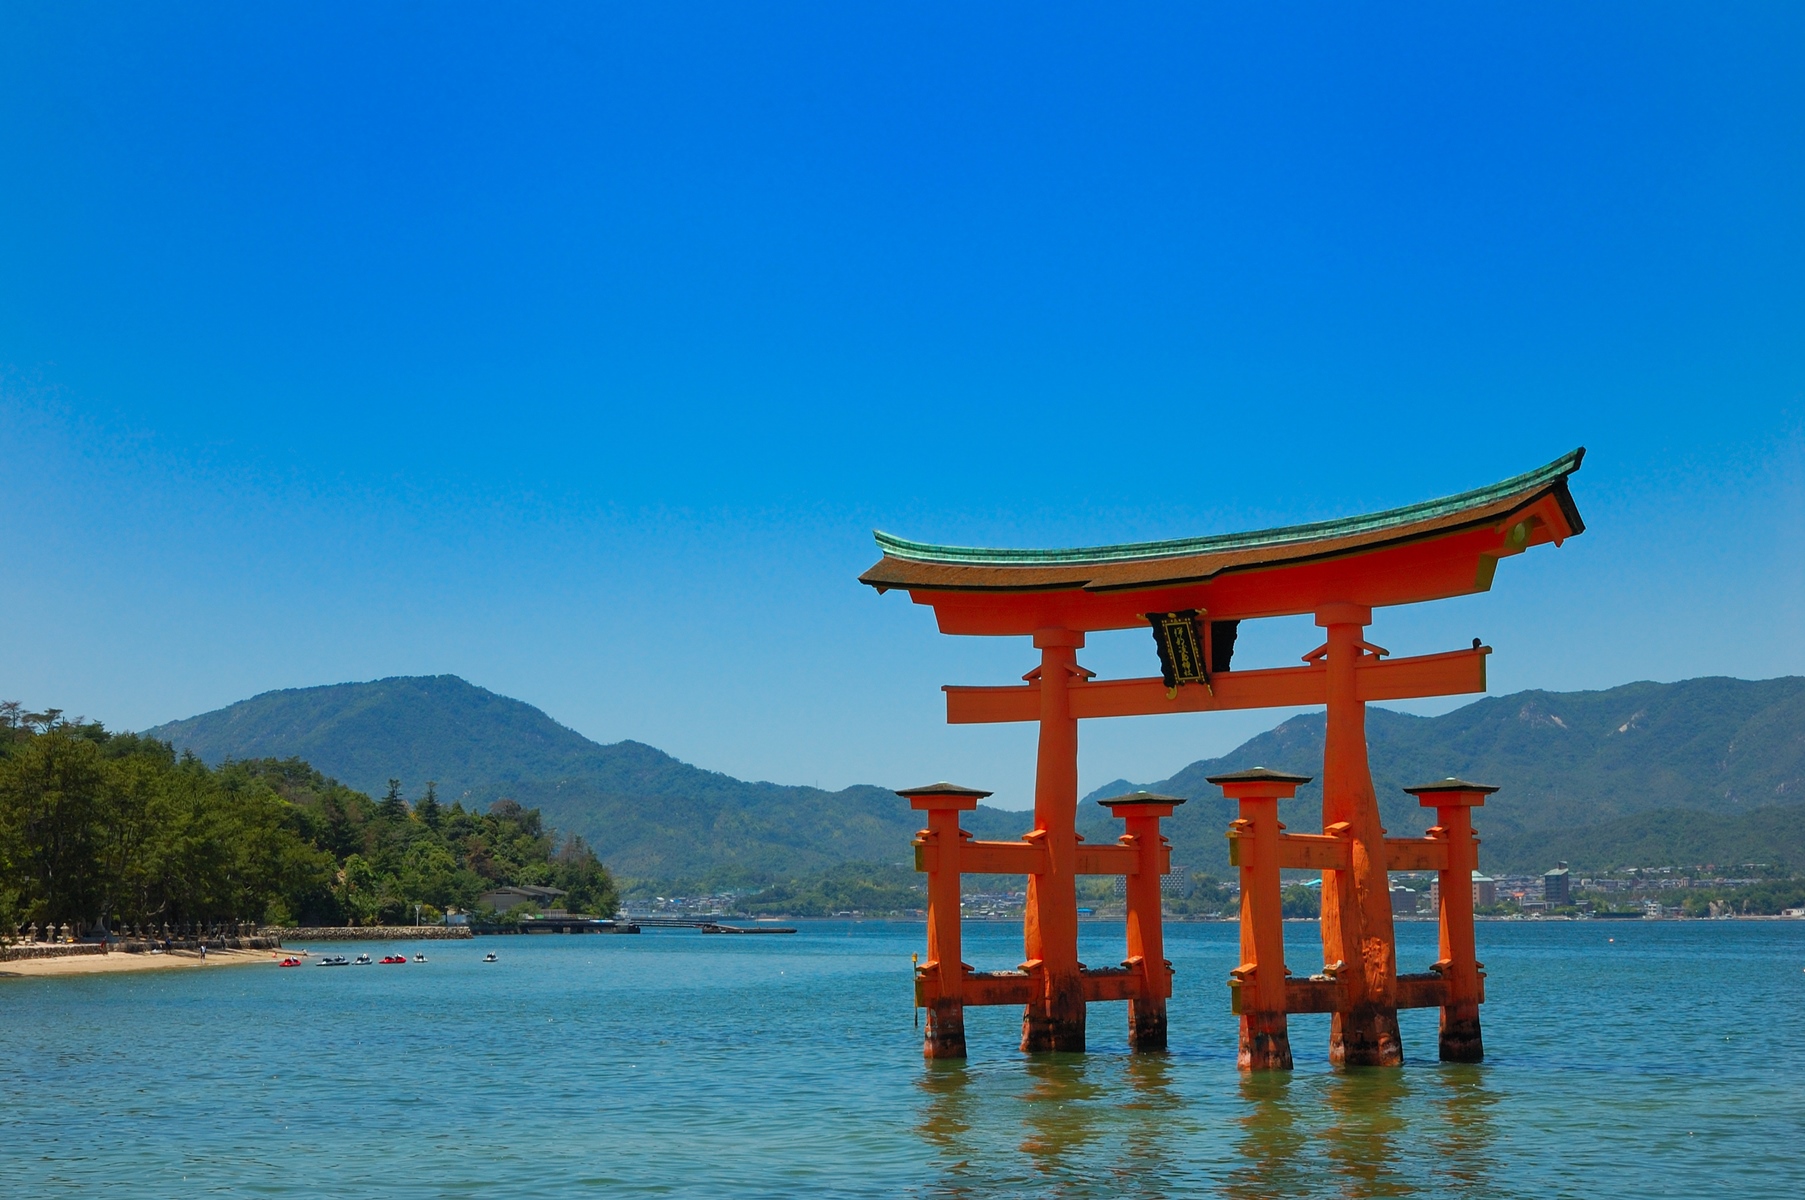 The floating torii gate at Itsukushima Shrine in Japan